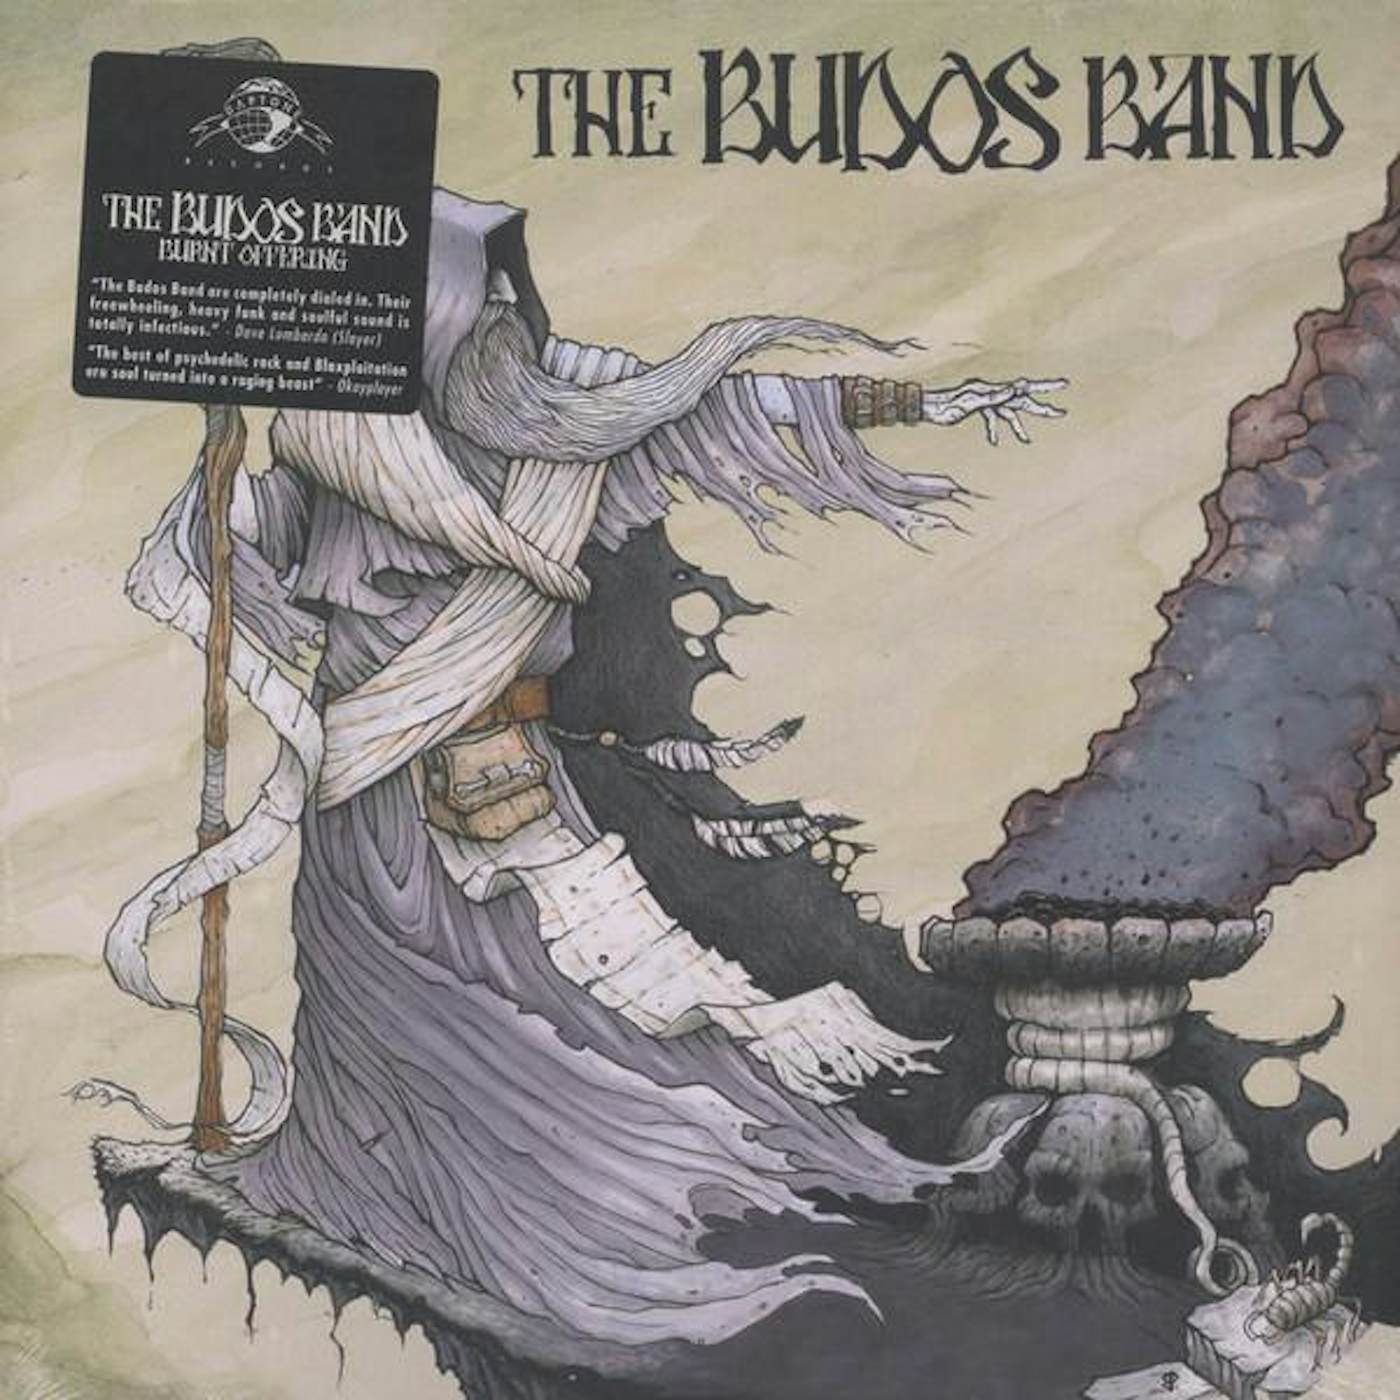 The Budos Band BURNT OFFERING (DLCD) (LTD) (DLX) (Vinyl)